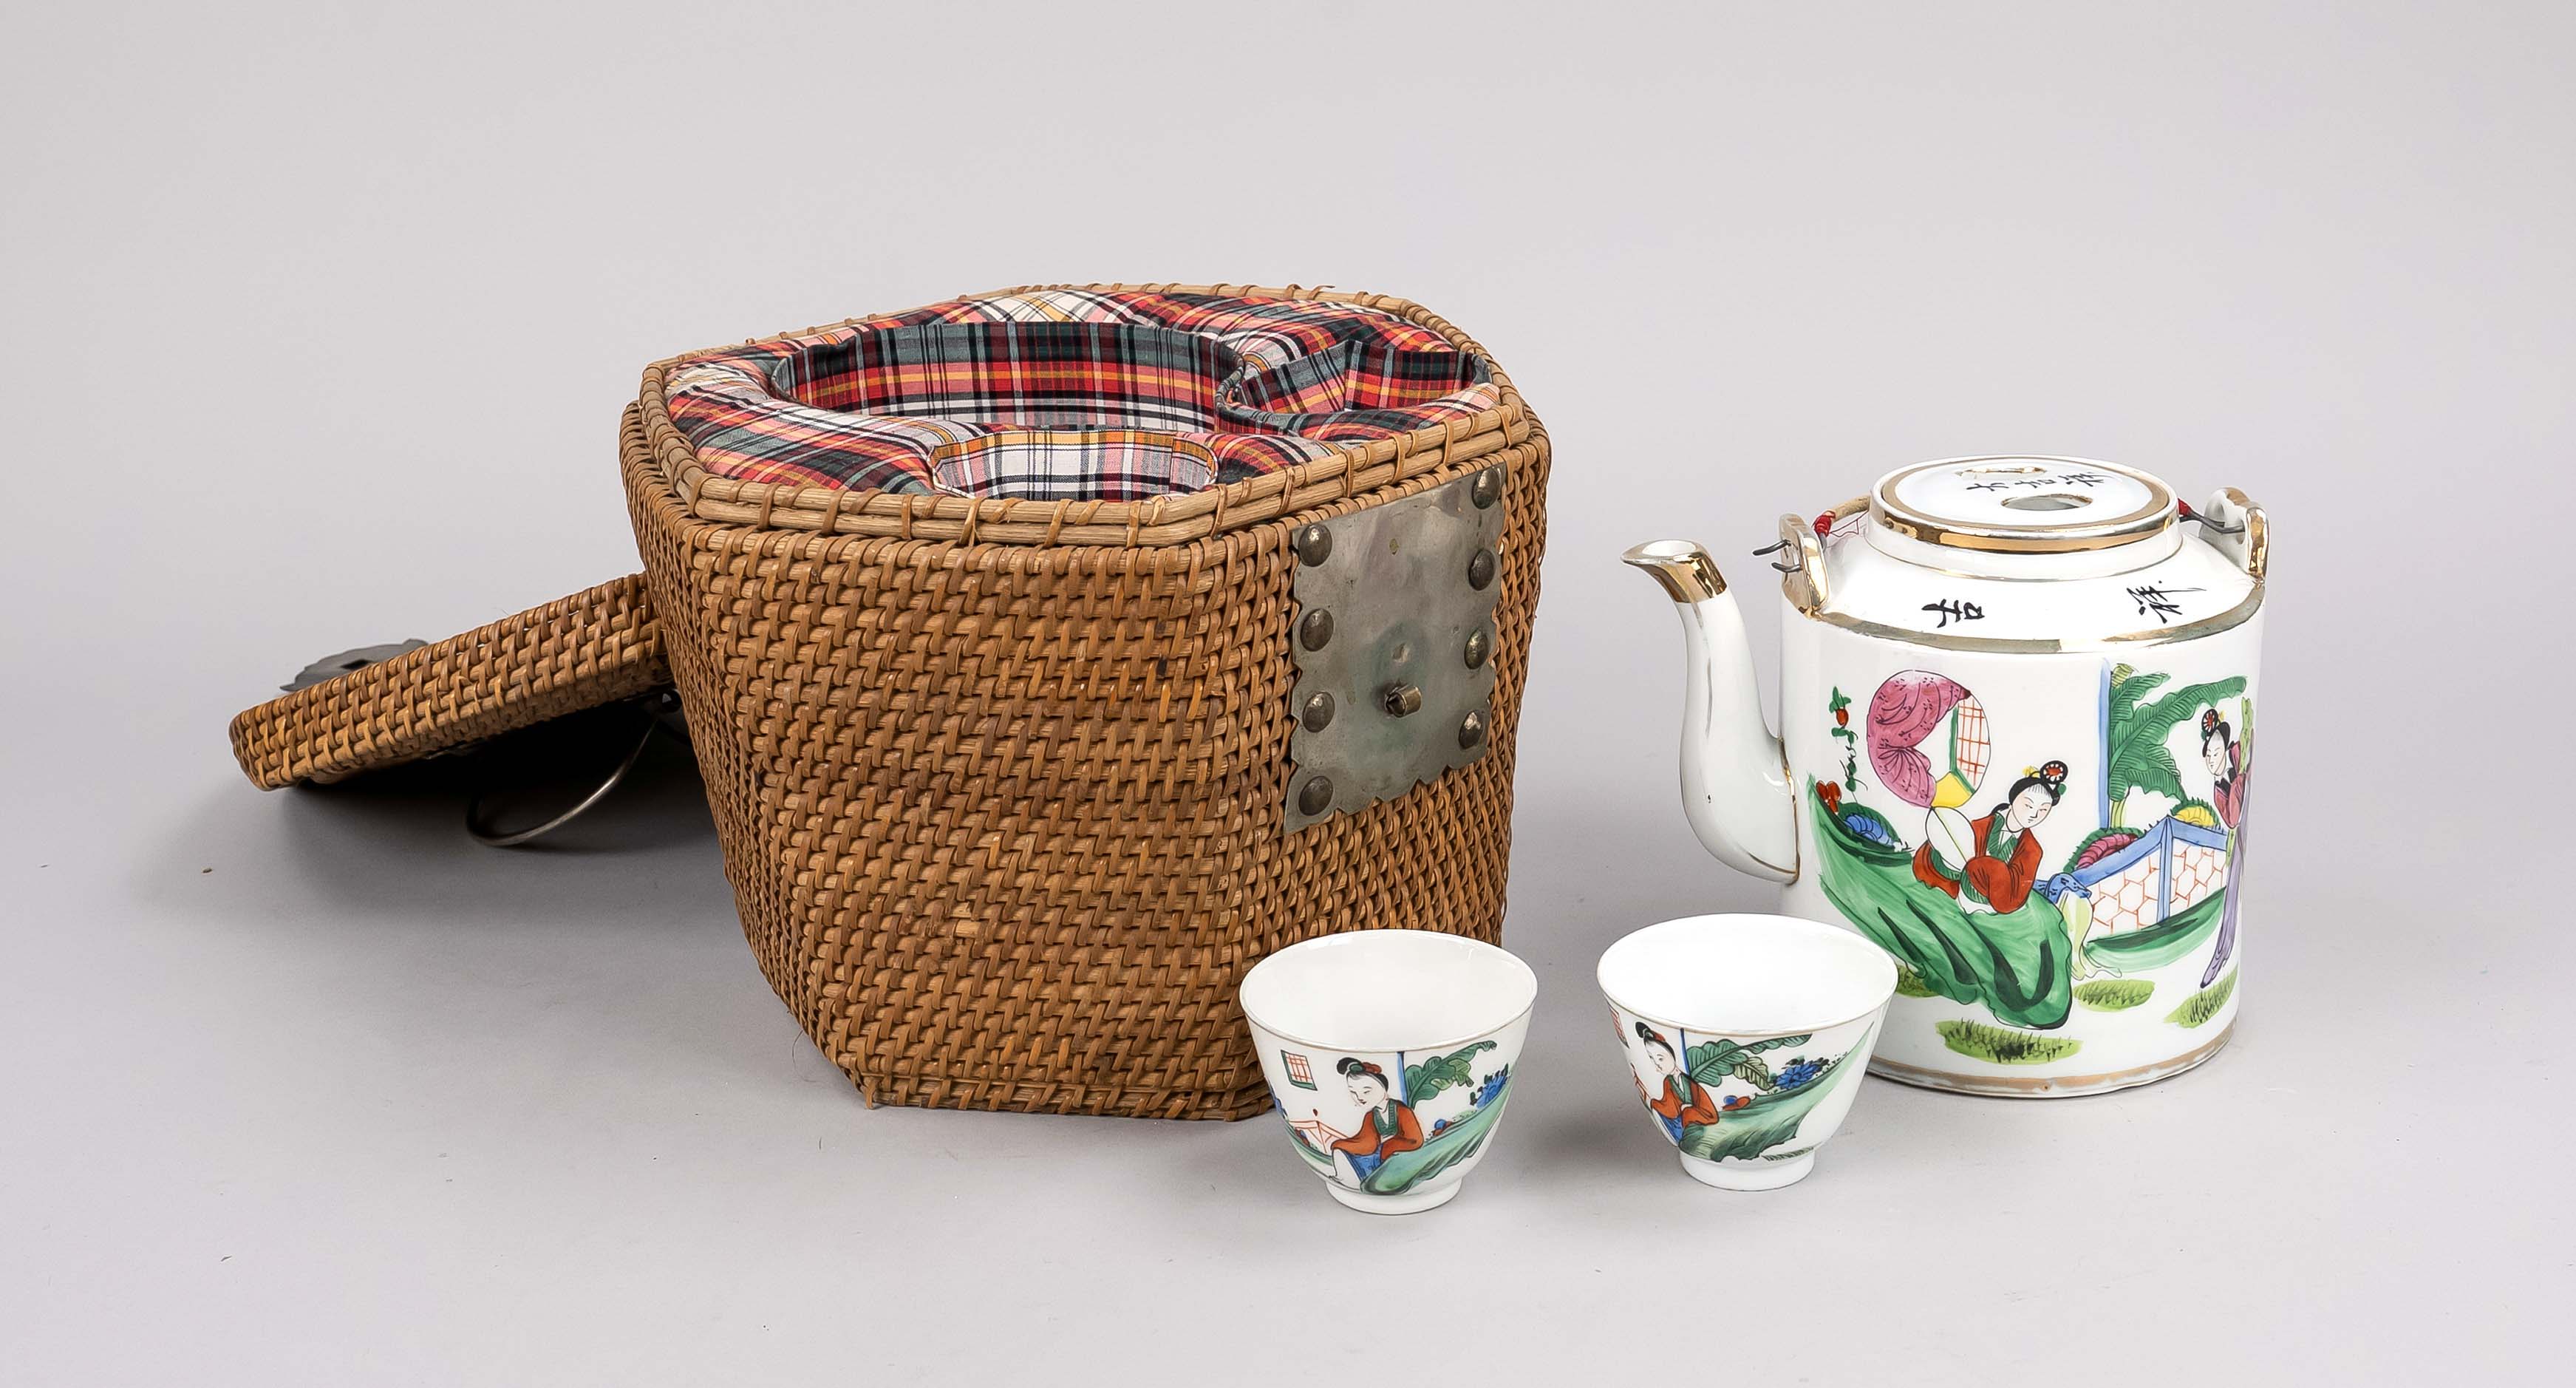 Tea set in basket, China, 20th century, porcelain pot and pair of koppchen, polychrome glaze